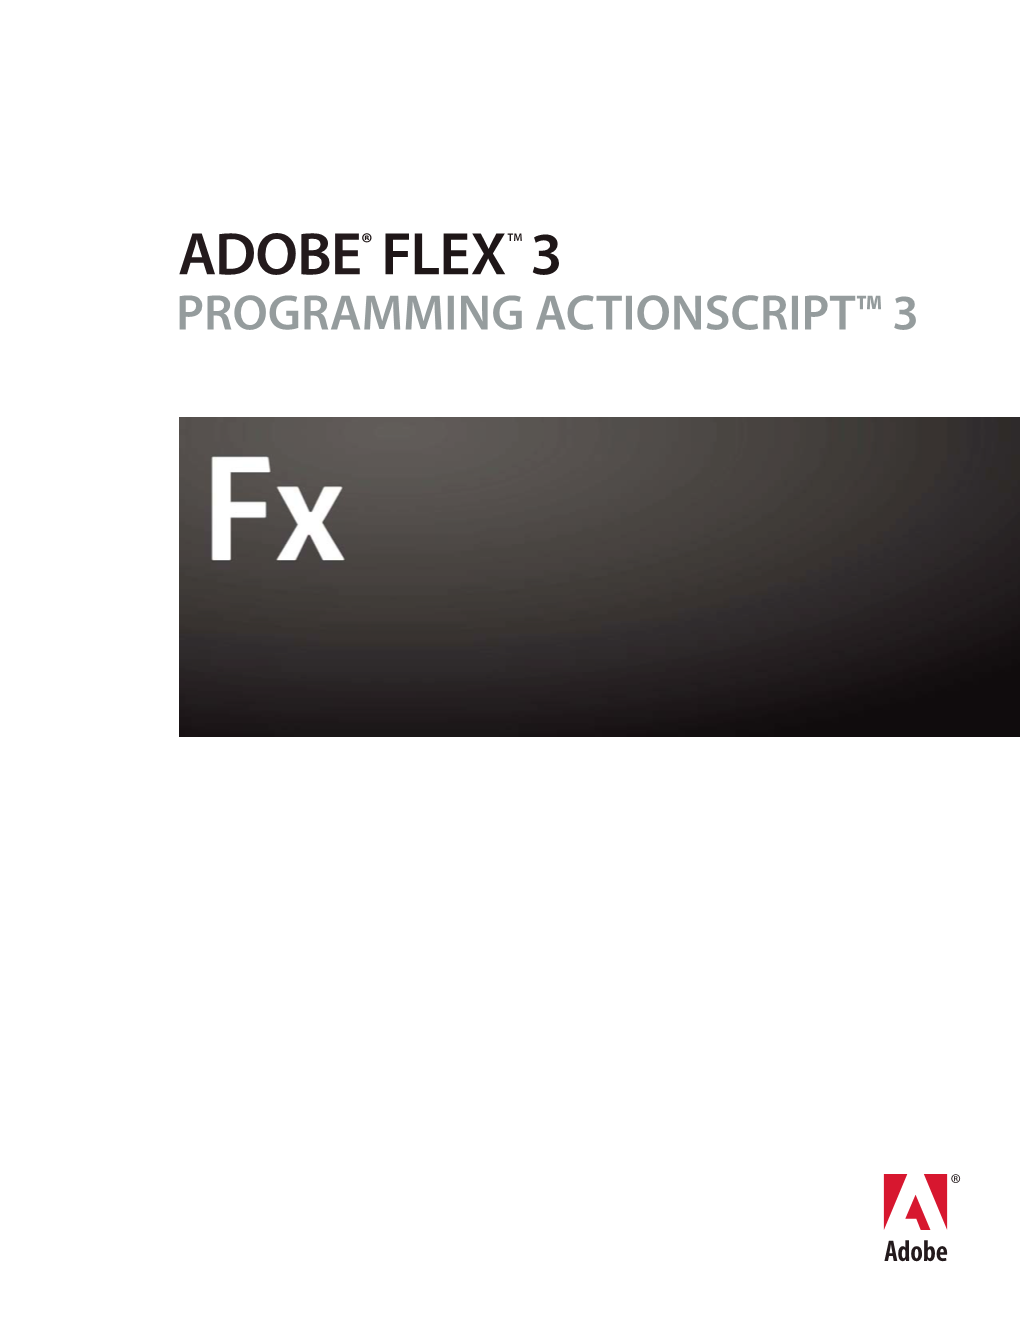 PROGRAMMING ACTIONSCRIPT™ 3 ADOBE FLEX 3 Ii Developer Guide